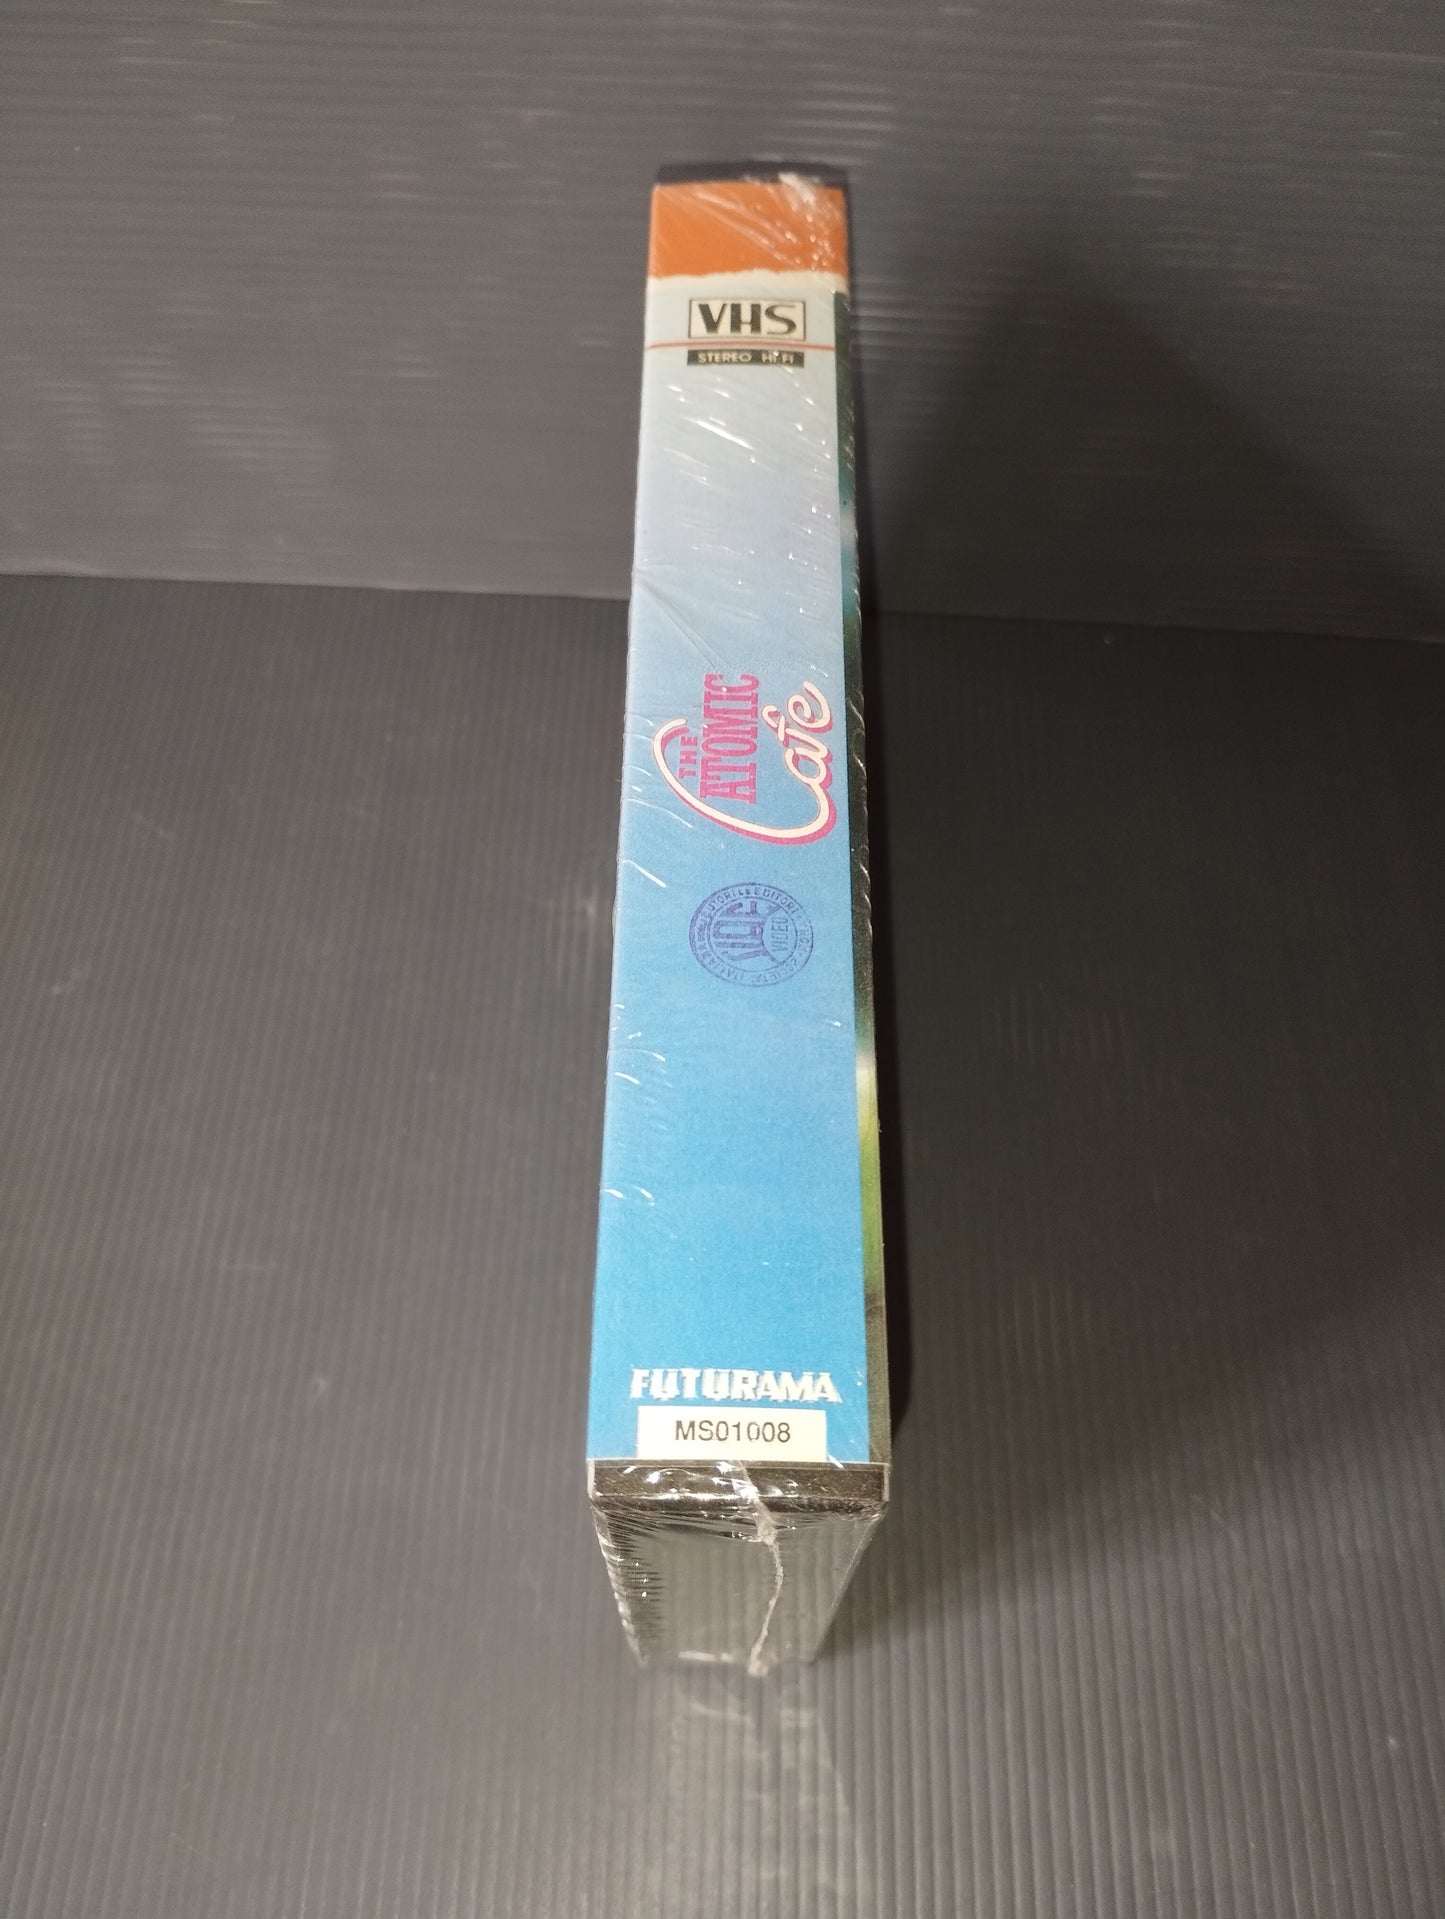 VHS "The Atomic Cafè"